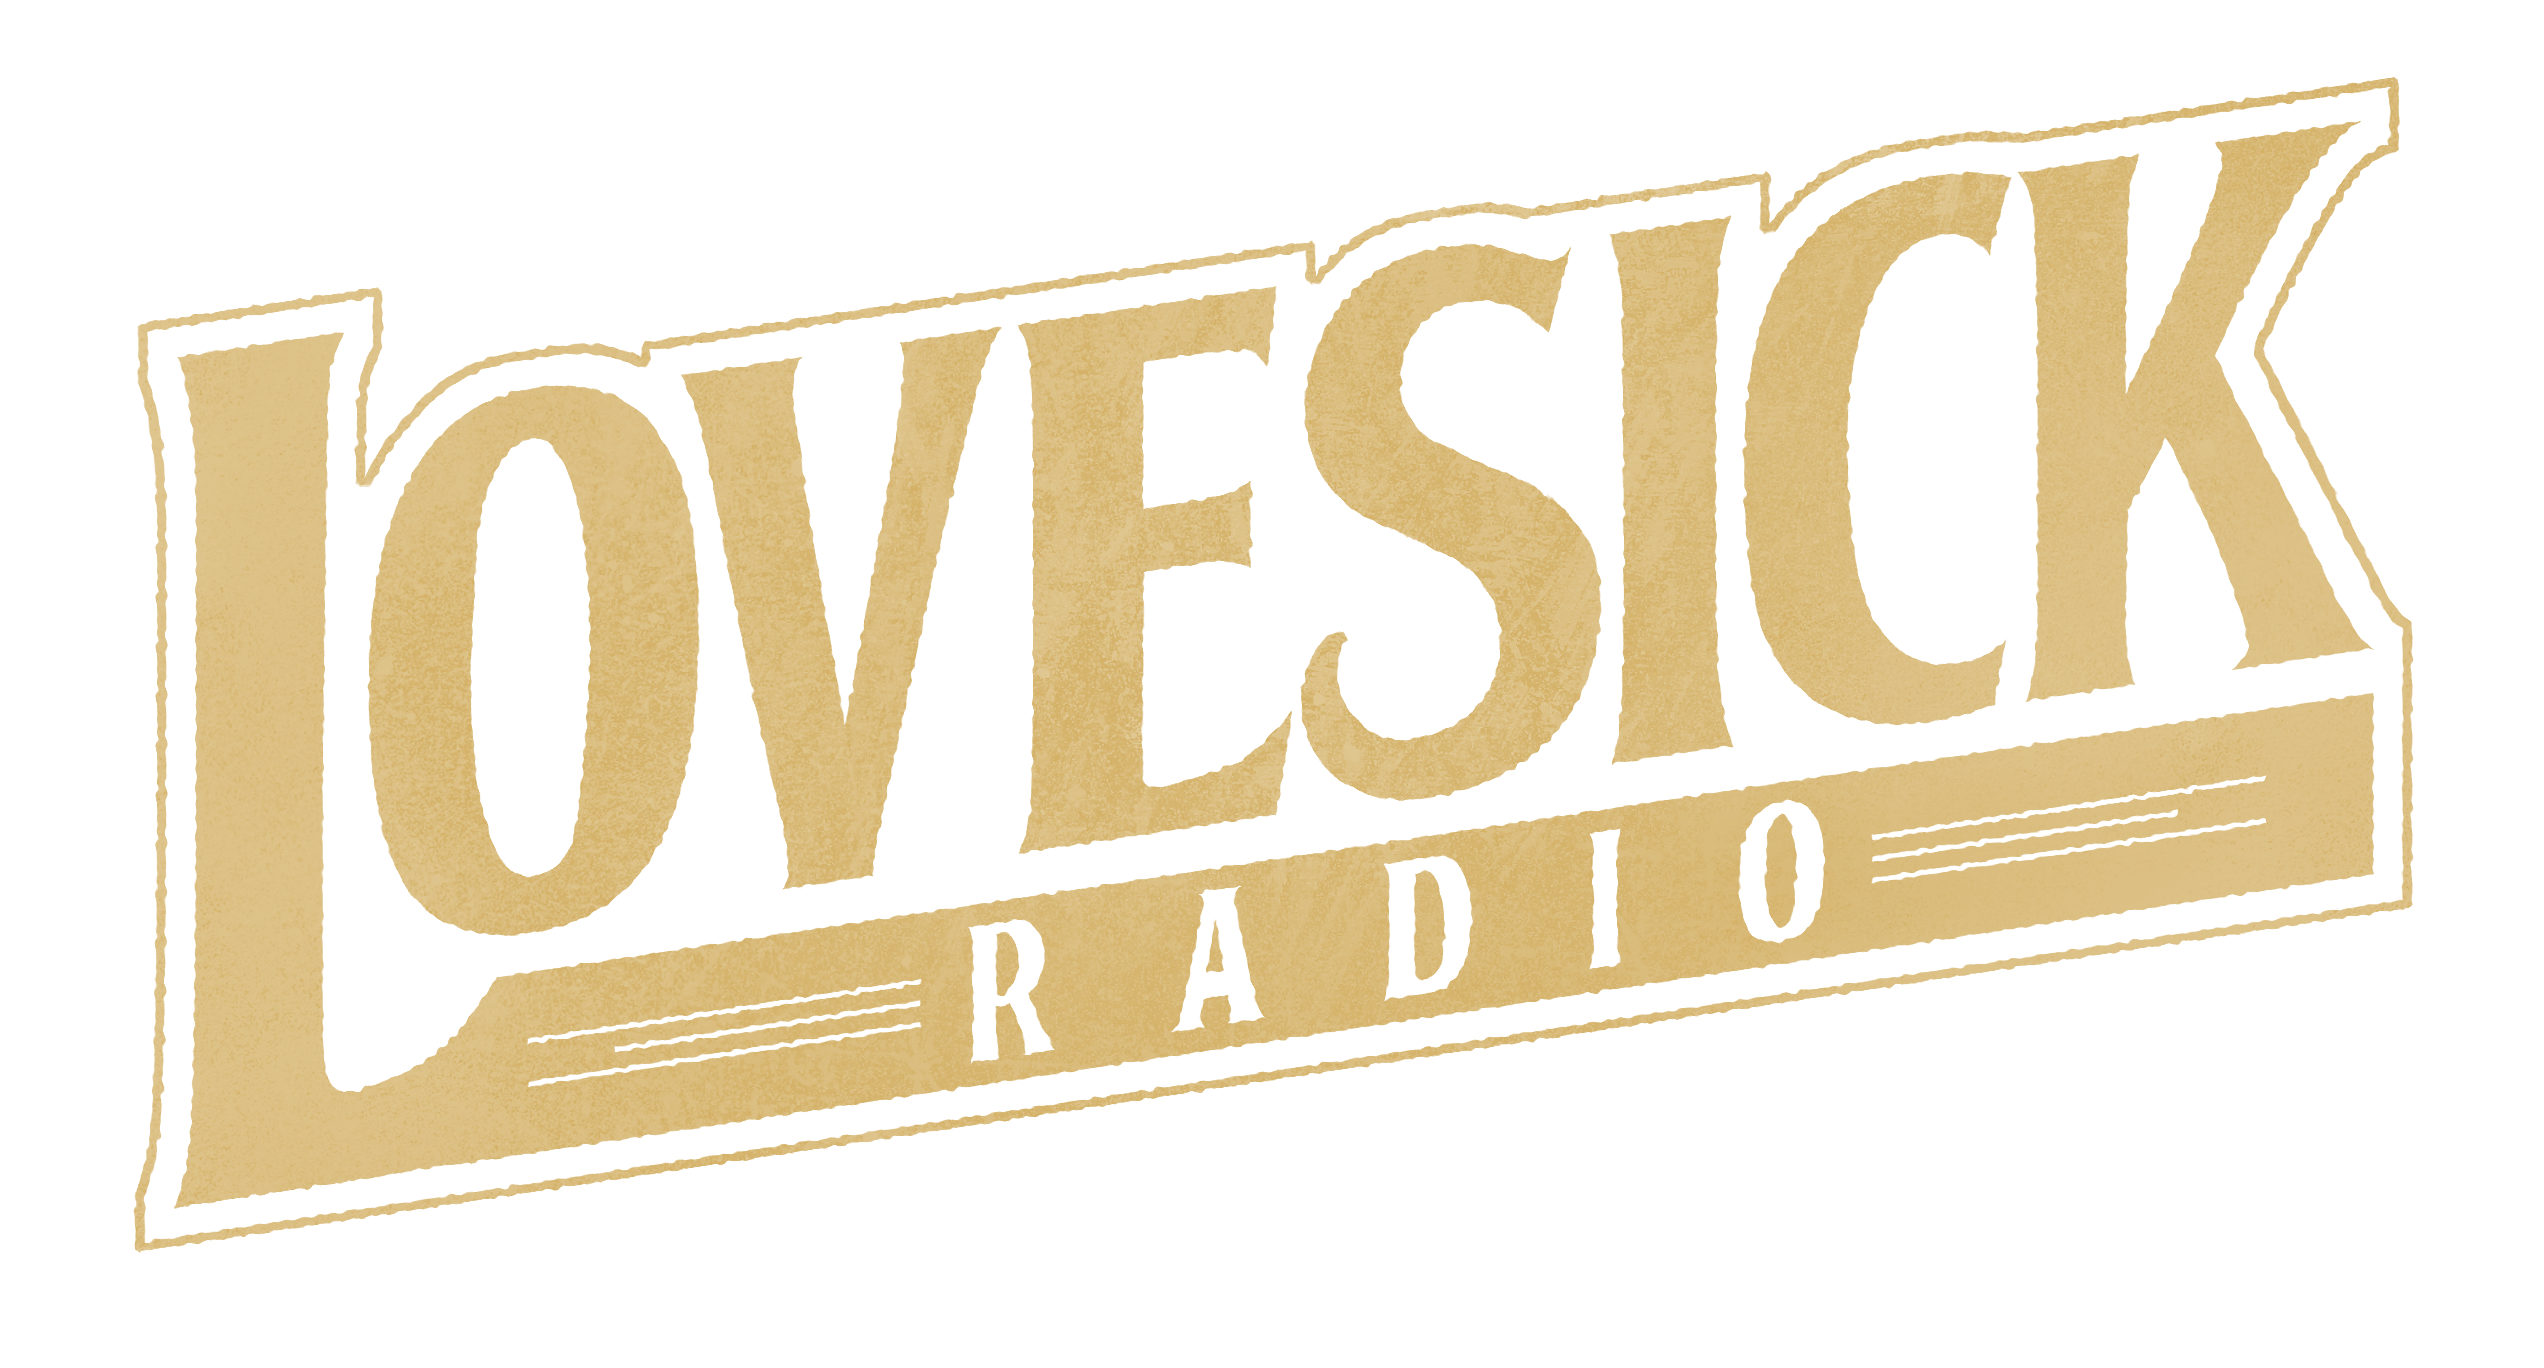 LoveSick Radio